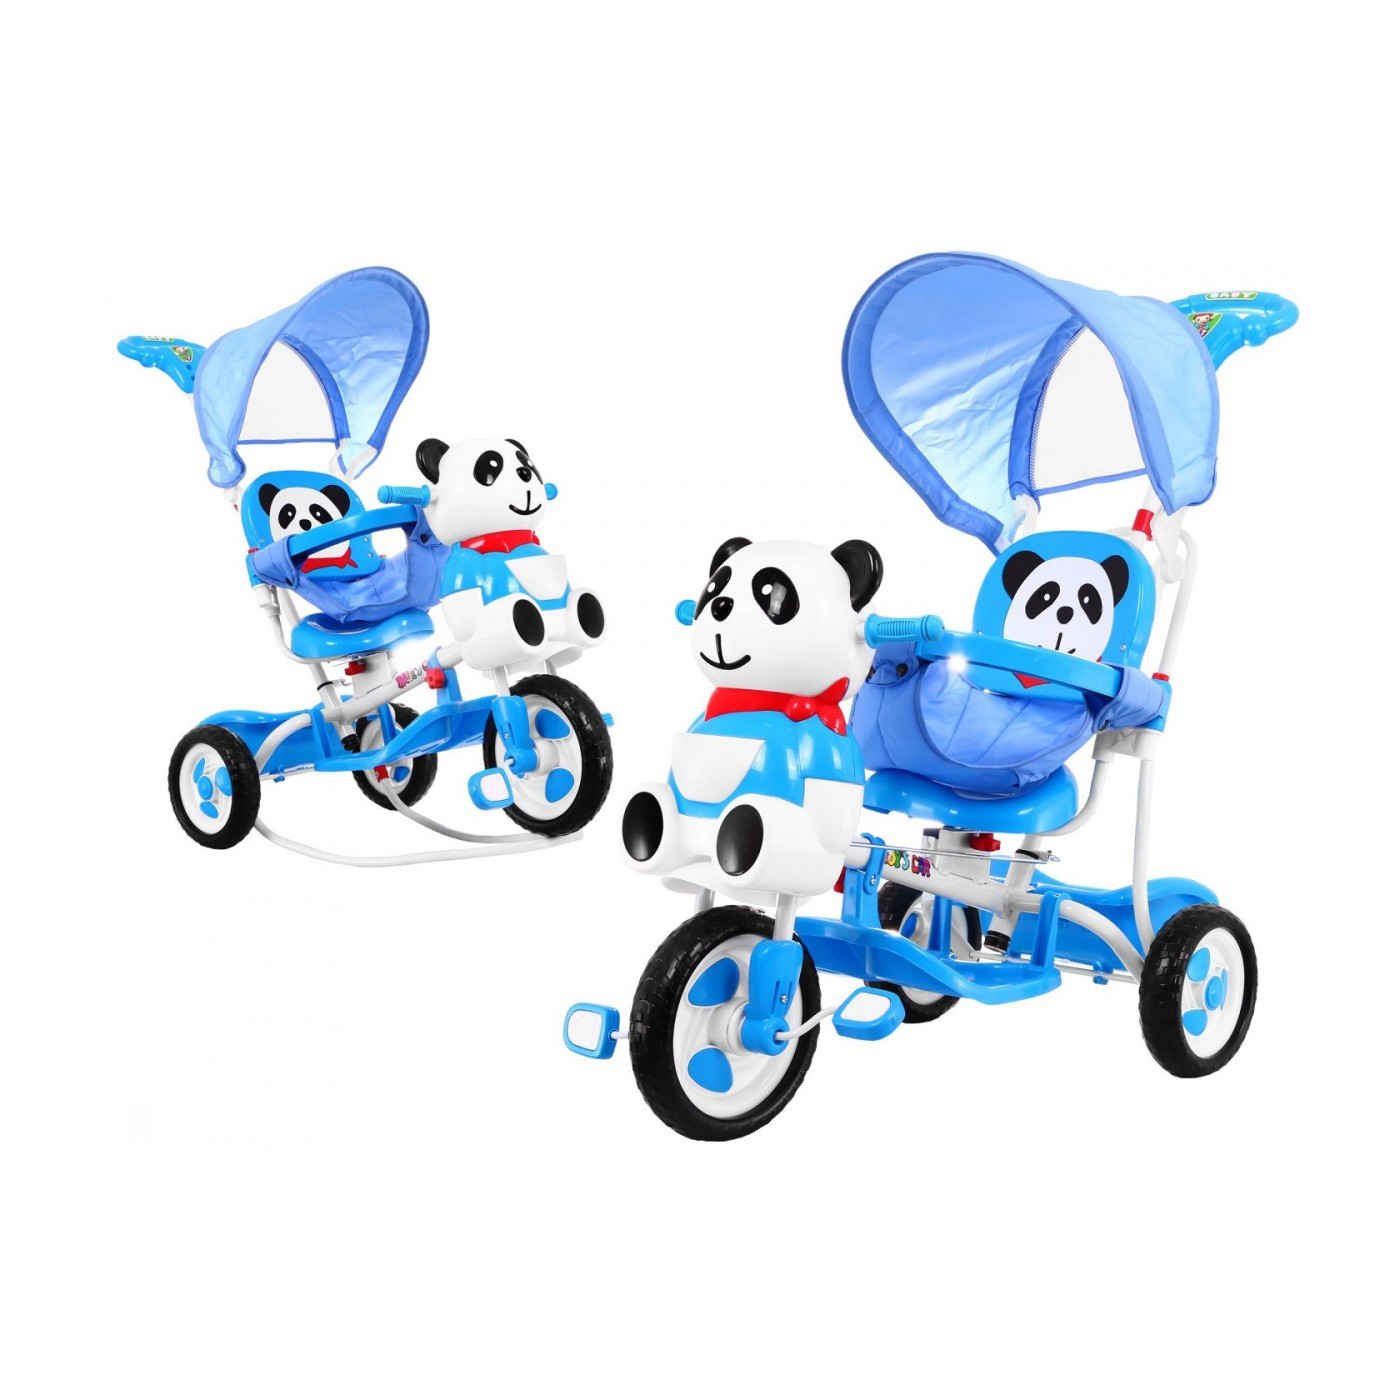 Tricycle PANDA blue